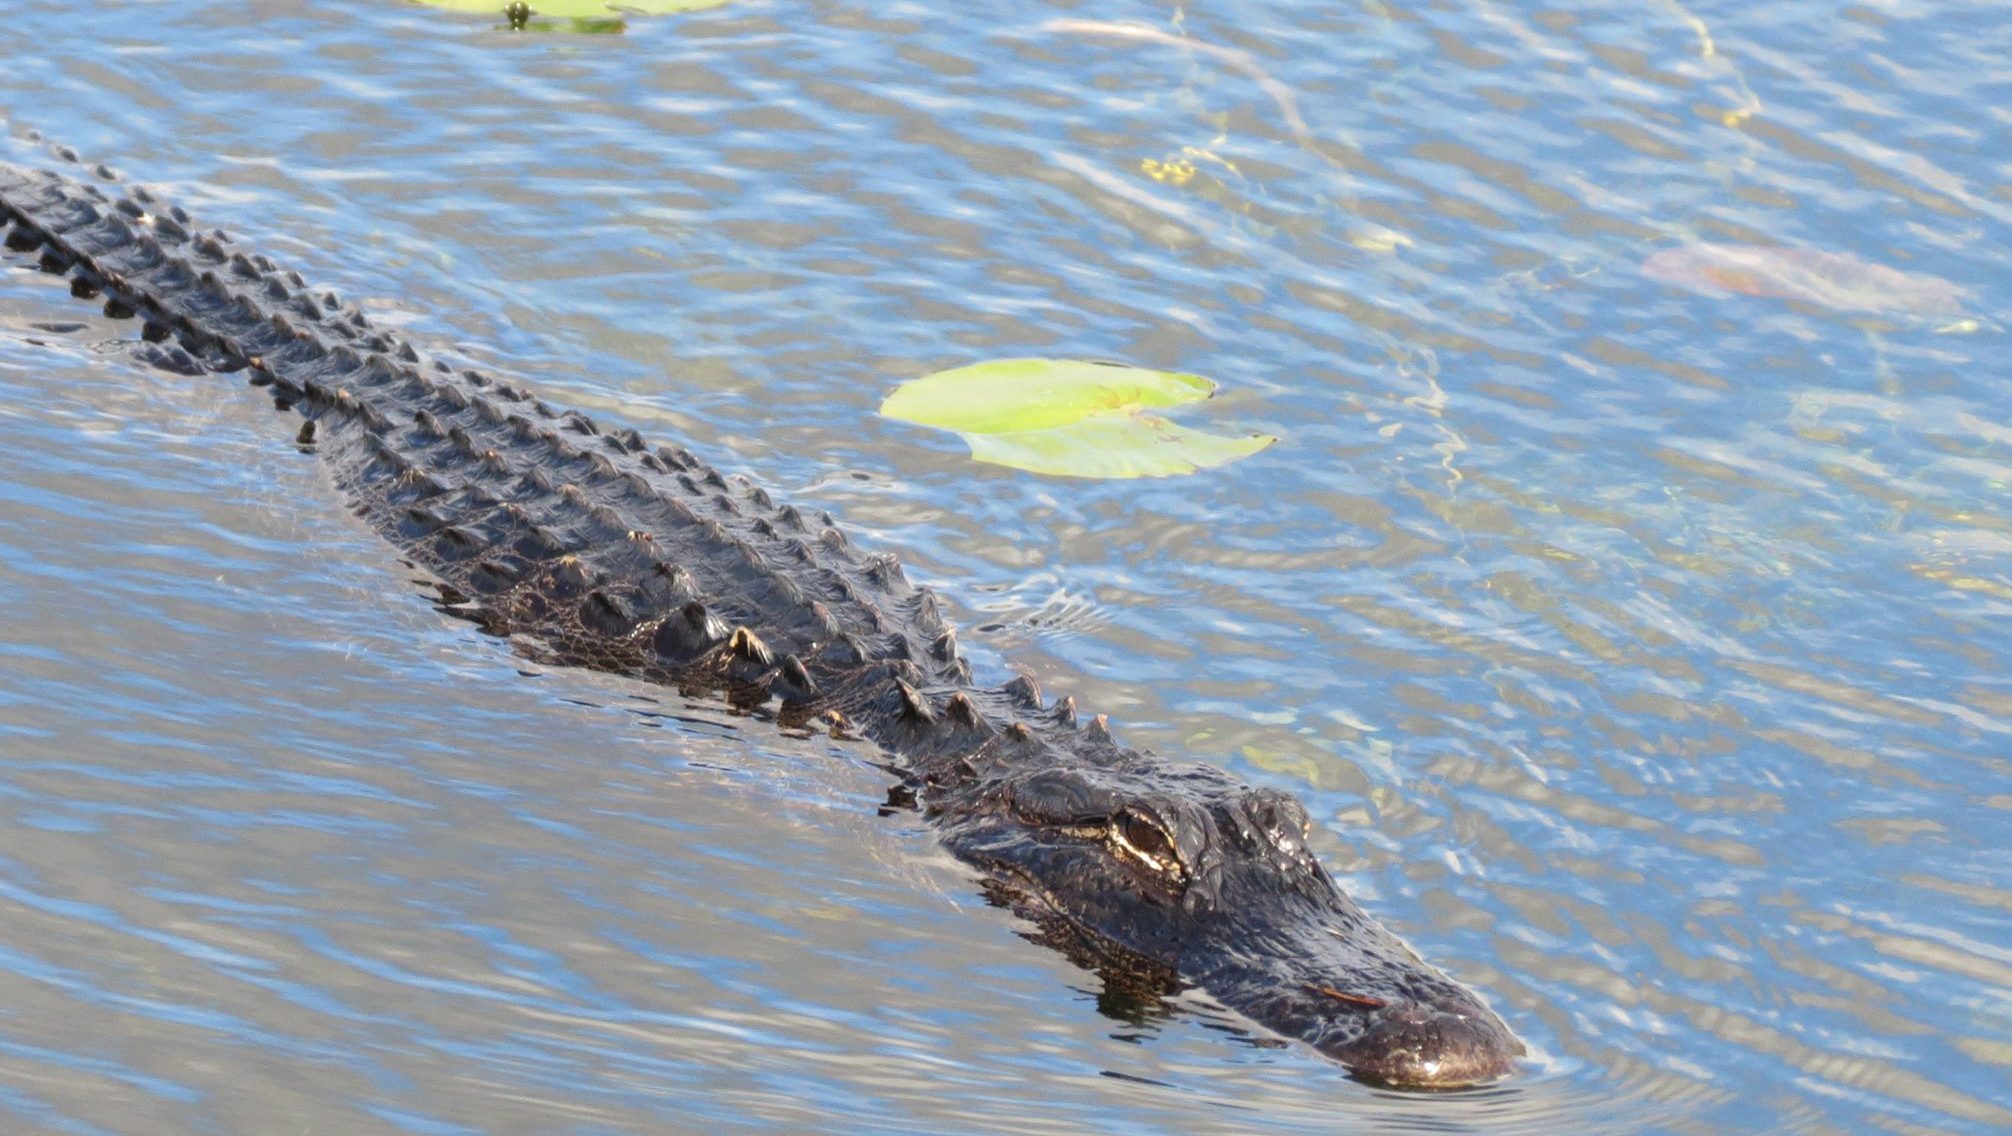 Alligator spotted by Dr. Scott Jones